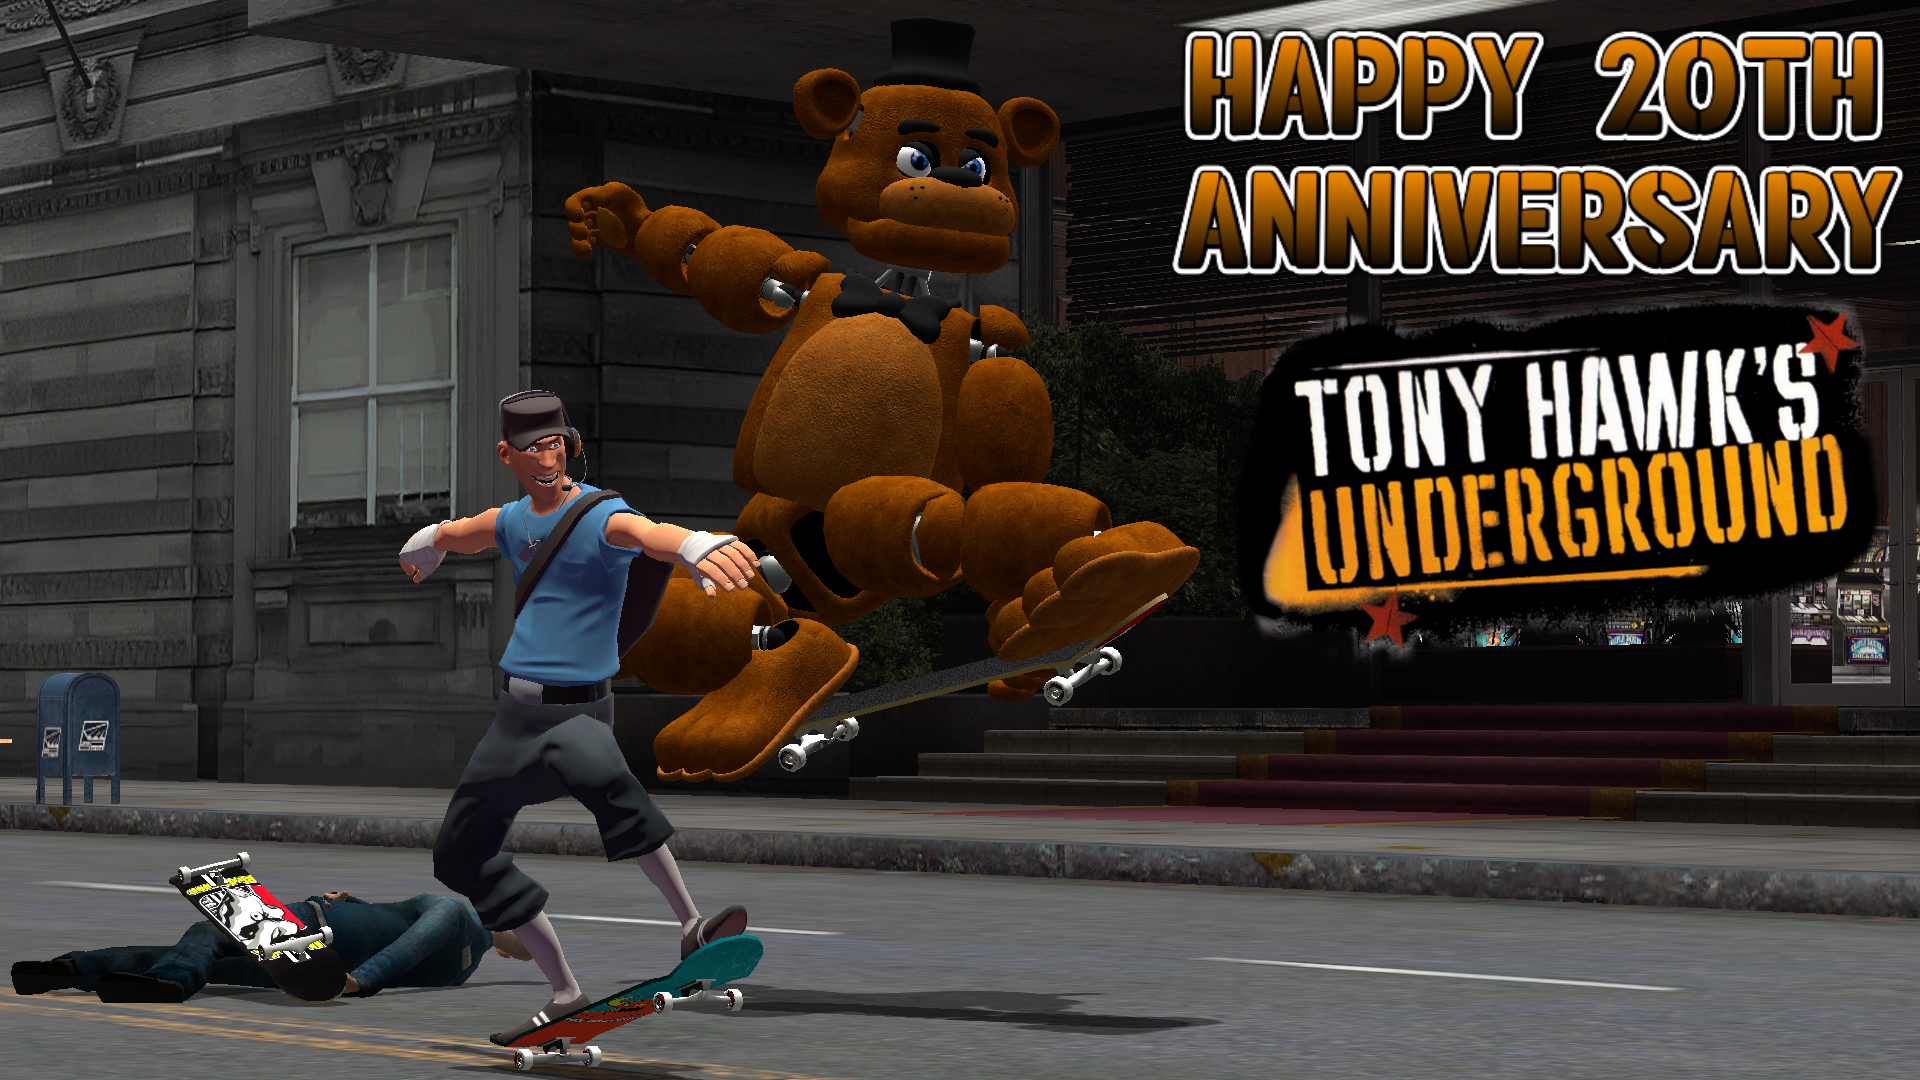 Happy 20th Anniversary Tony Hawk's Underground! by Harejules on DeviantArt